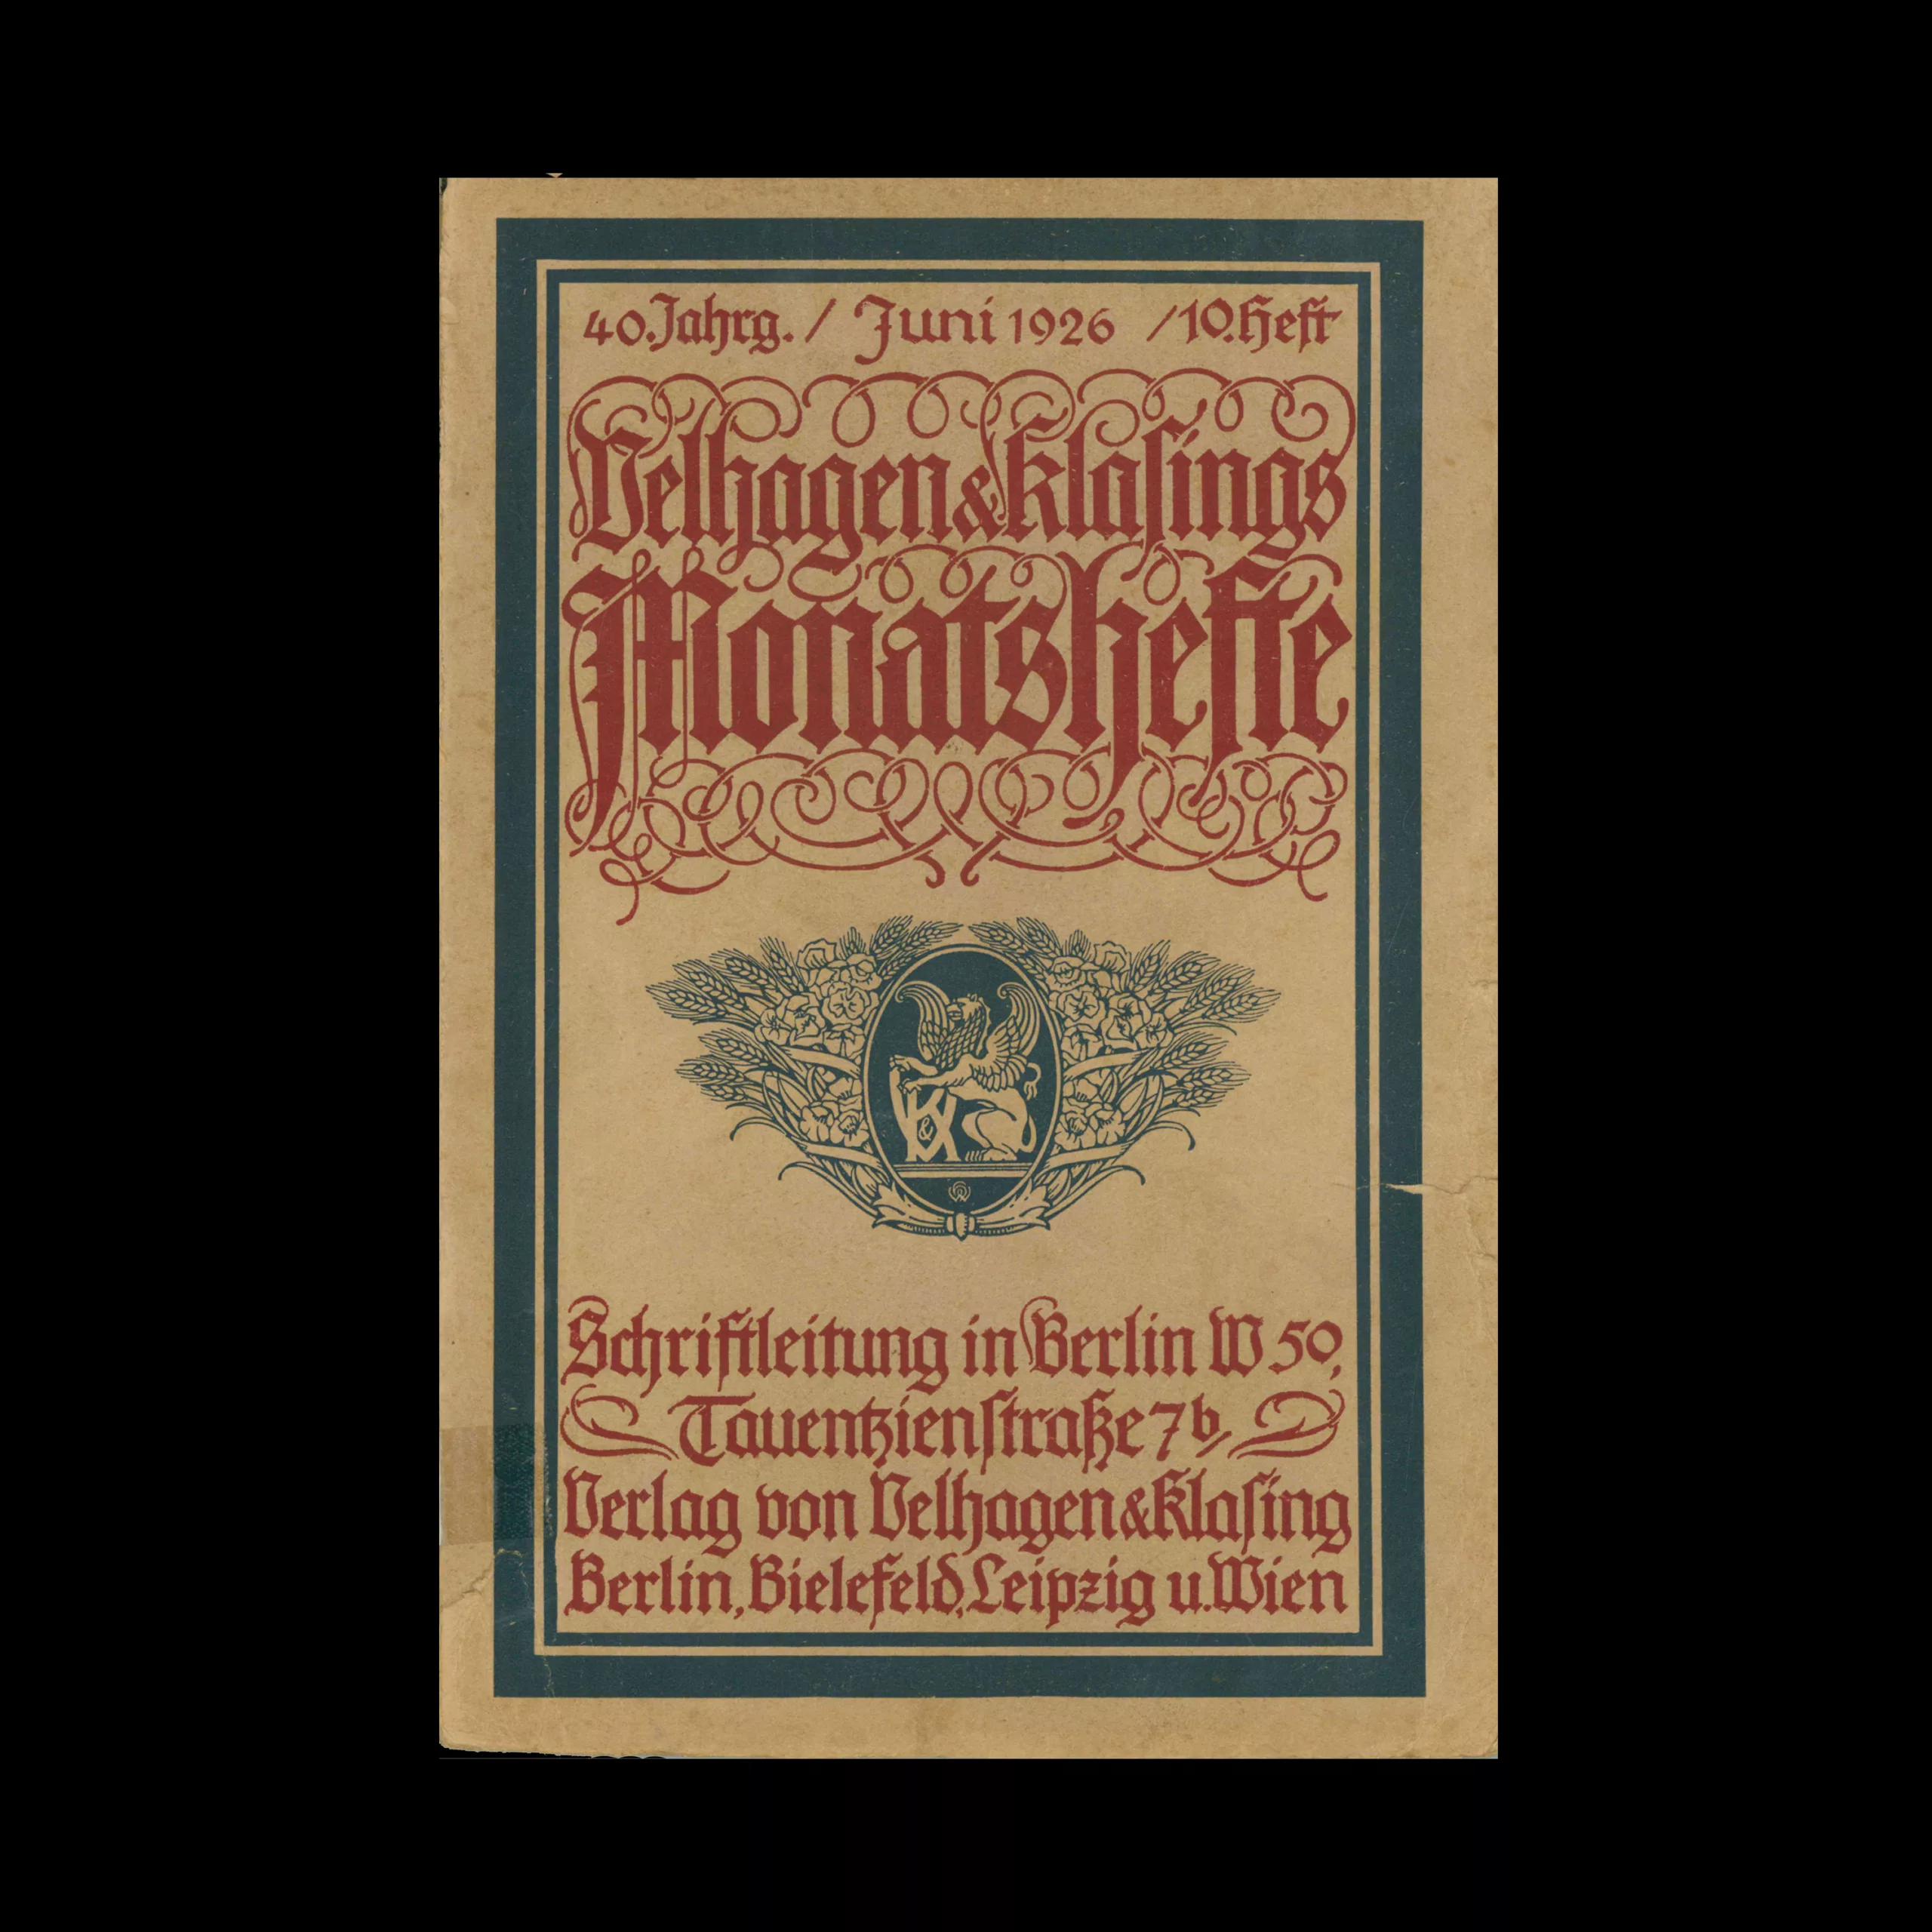 Velhagen & Klasings Monatshefte, Heft 10, Juni 1926